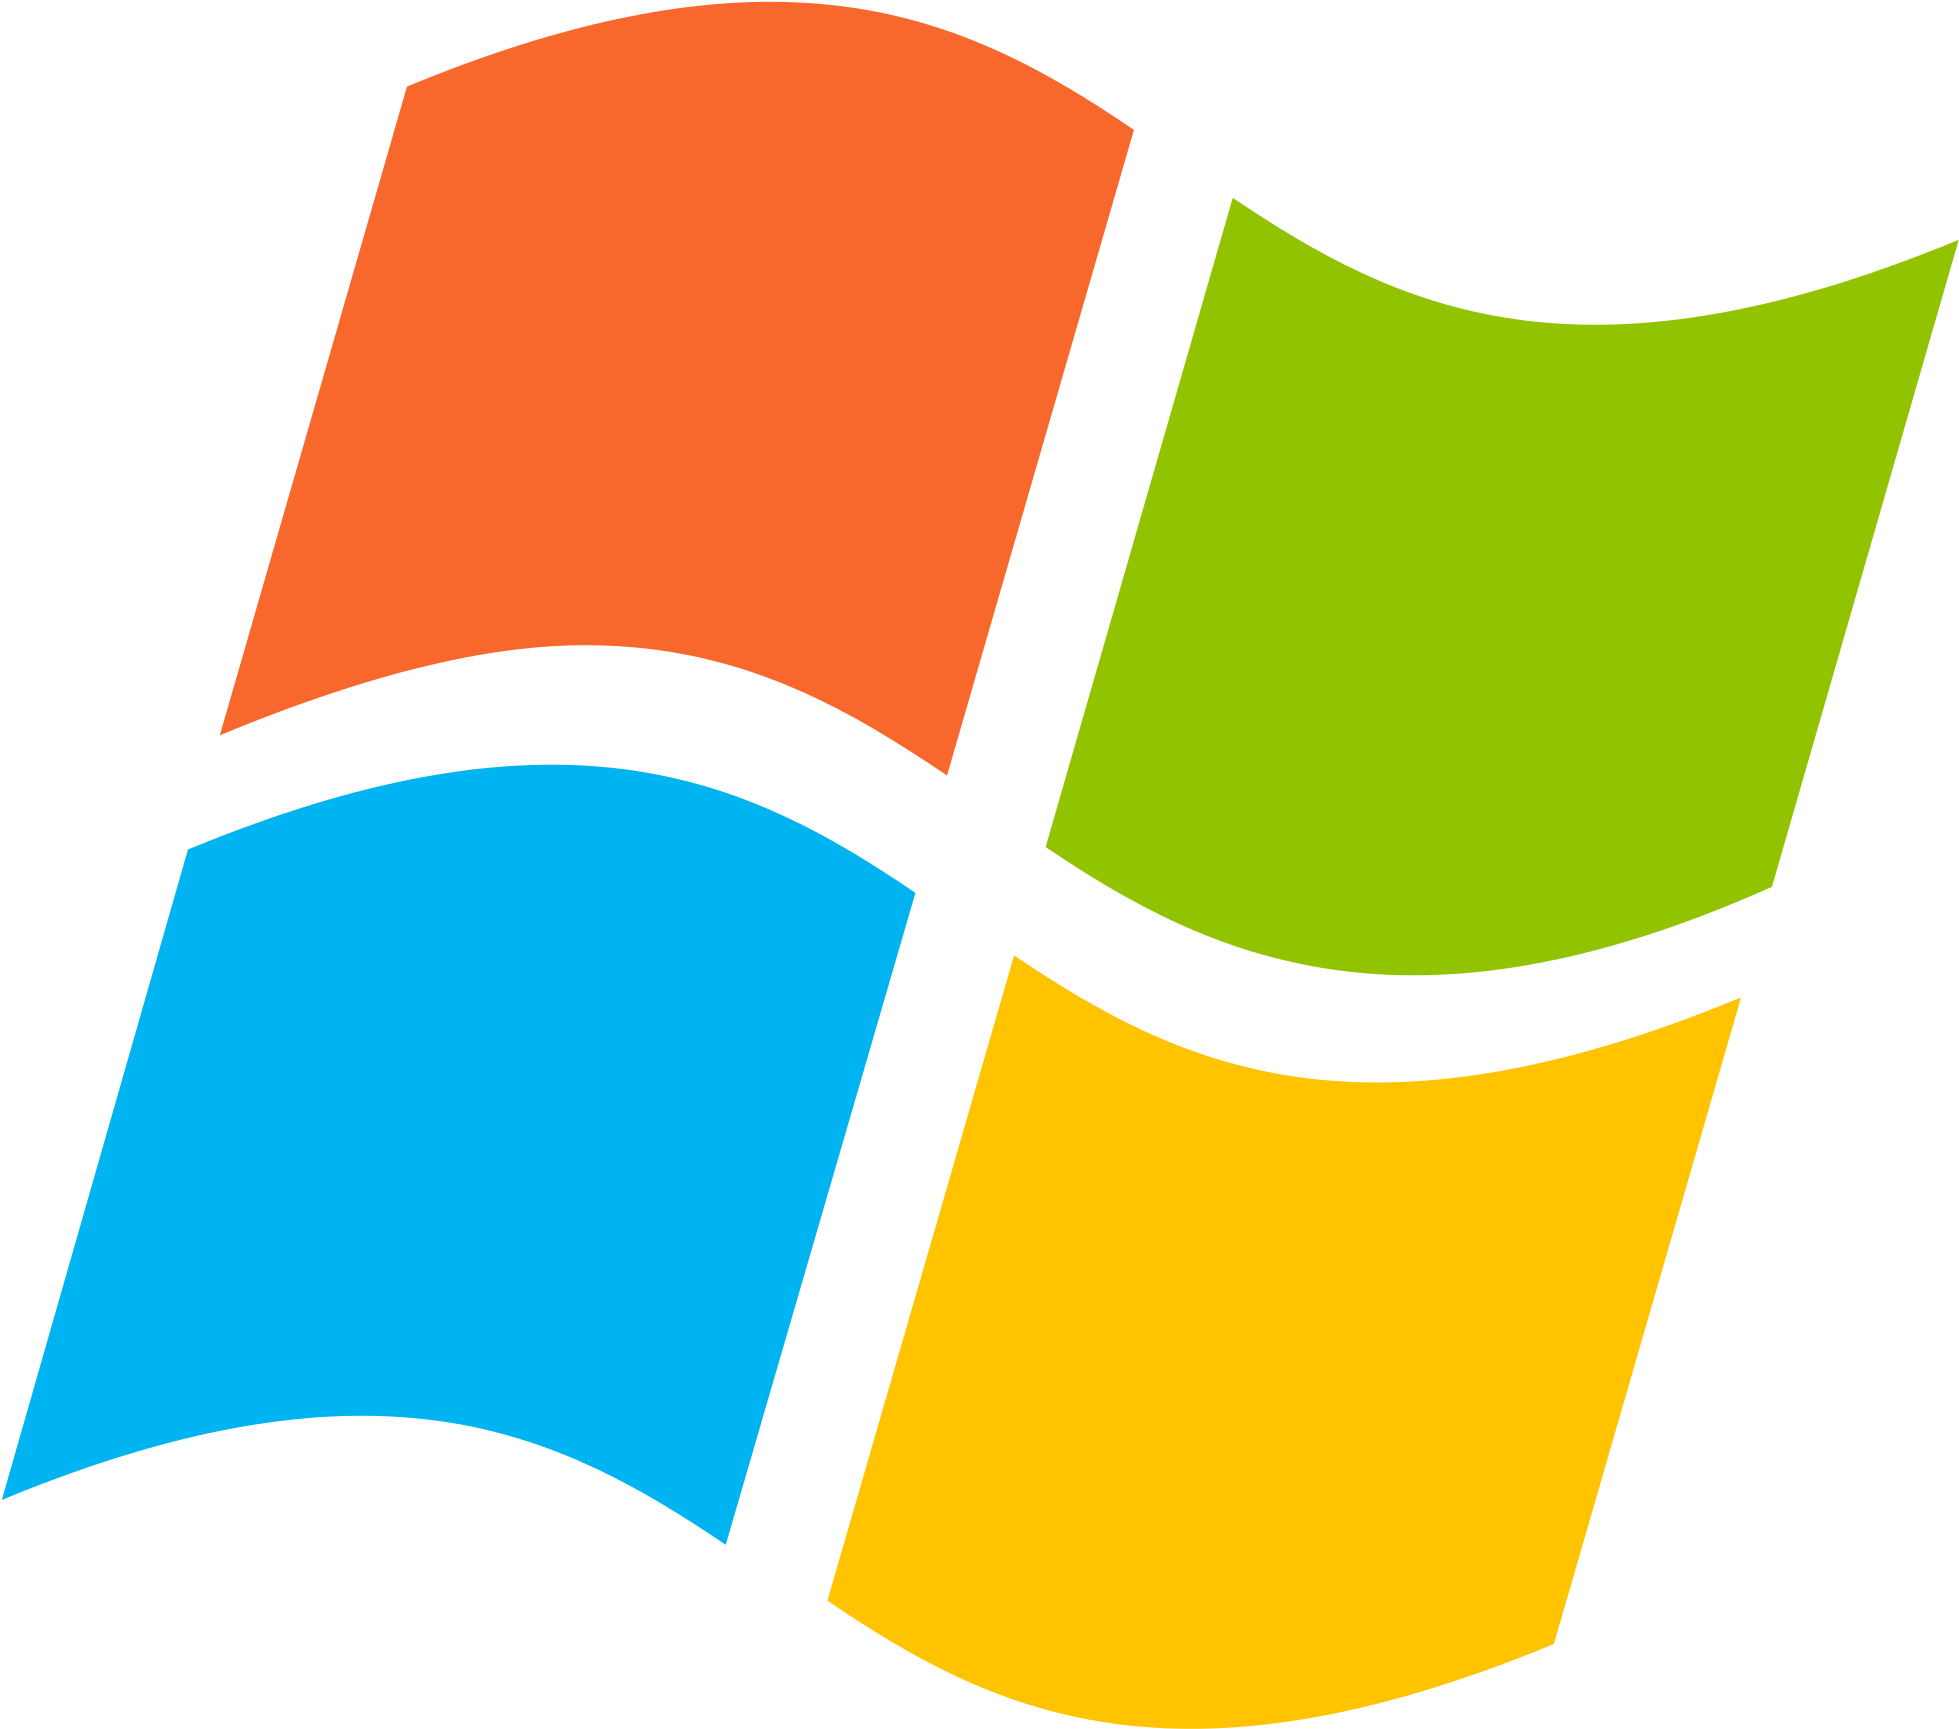 A Logo Of A Microsoft Company